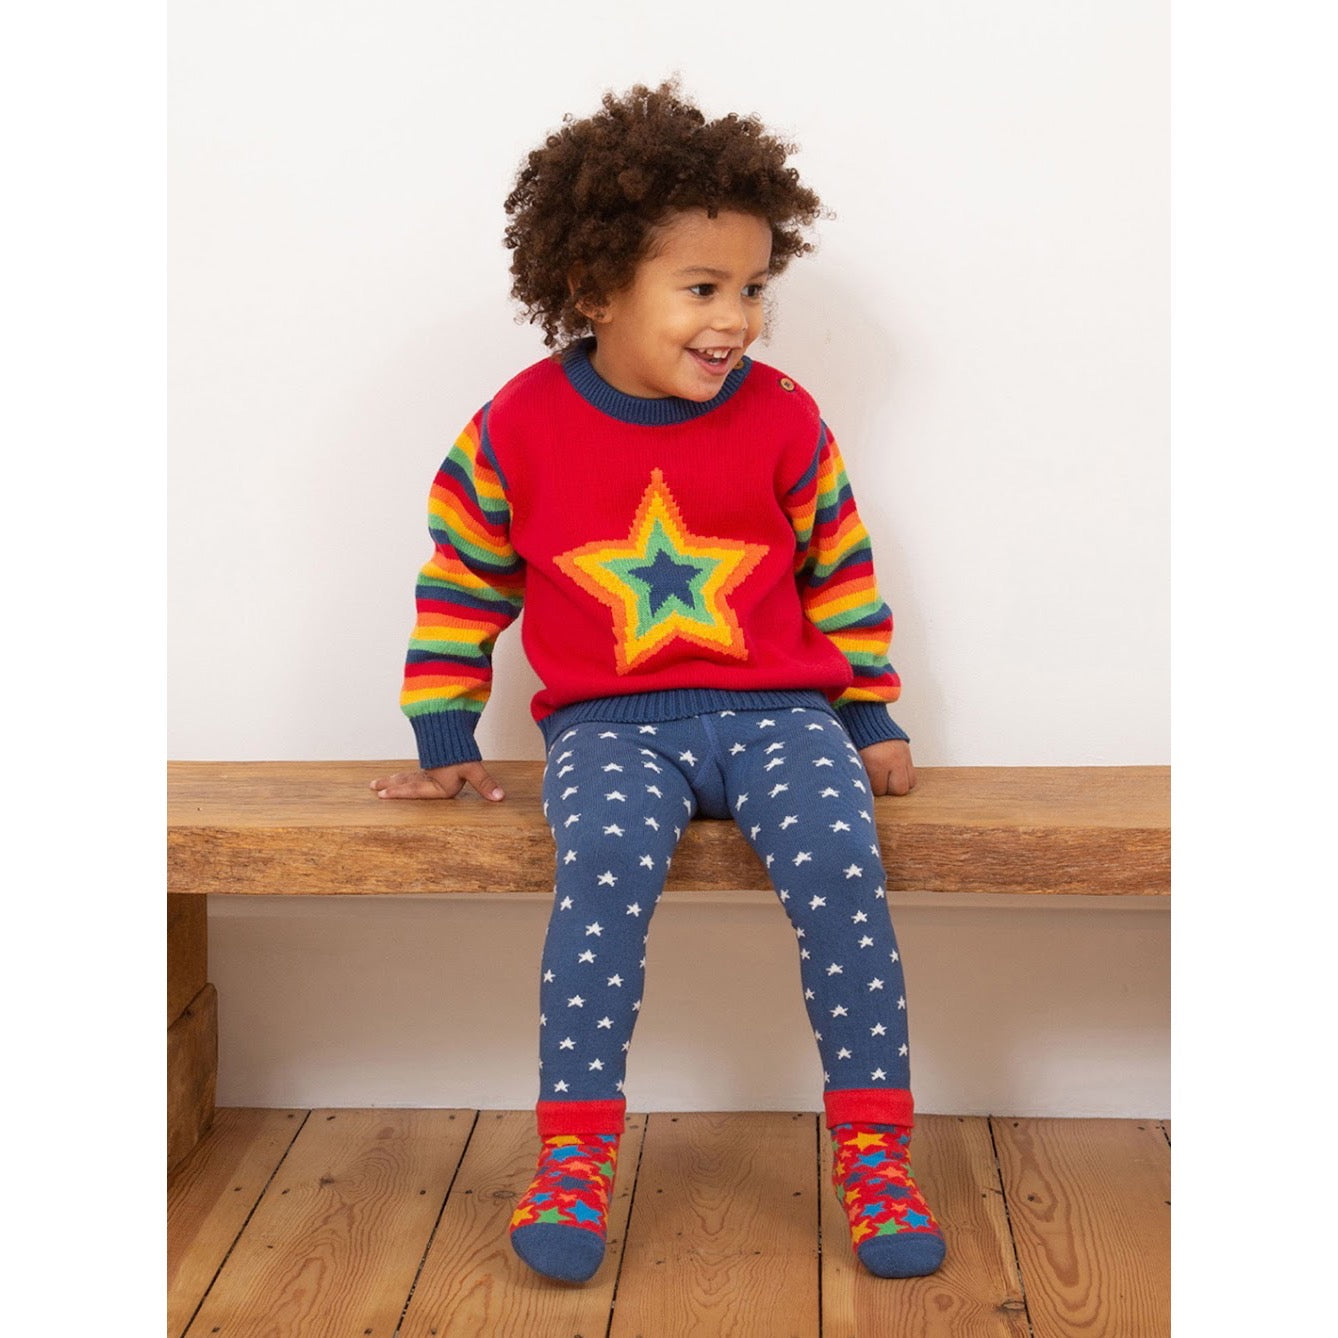 Kite Superstar Infant Sweater 9581 Clothing 6-9M / Multi,9-12M / Multi,12-18M / Multi,18-24M/2Y / Multi,3YRS / Multi,4YRS / Multi,5YRS / Multi